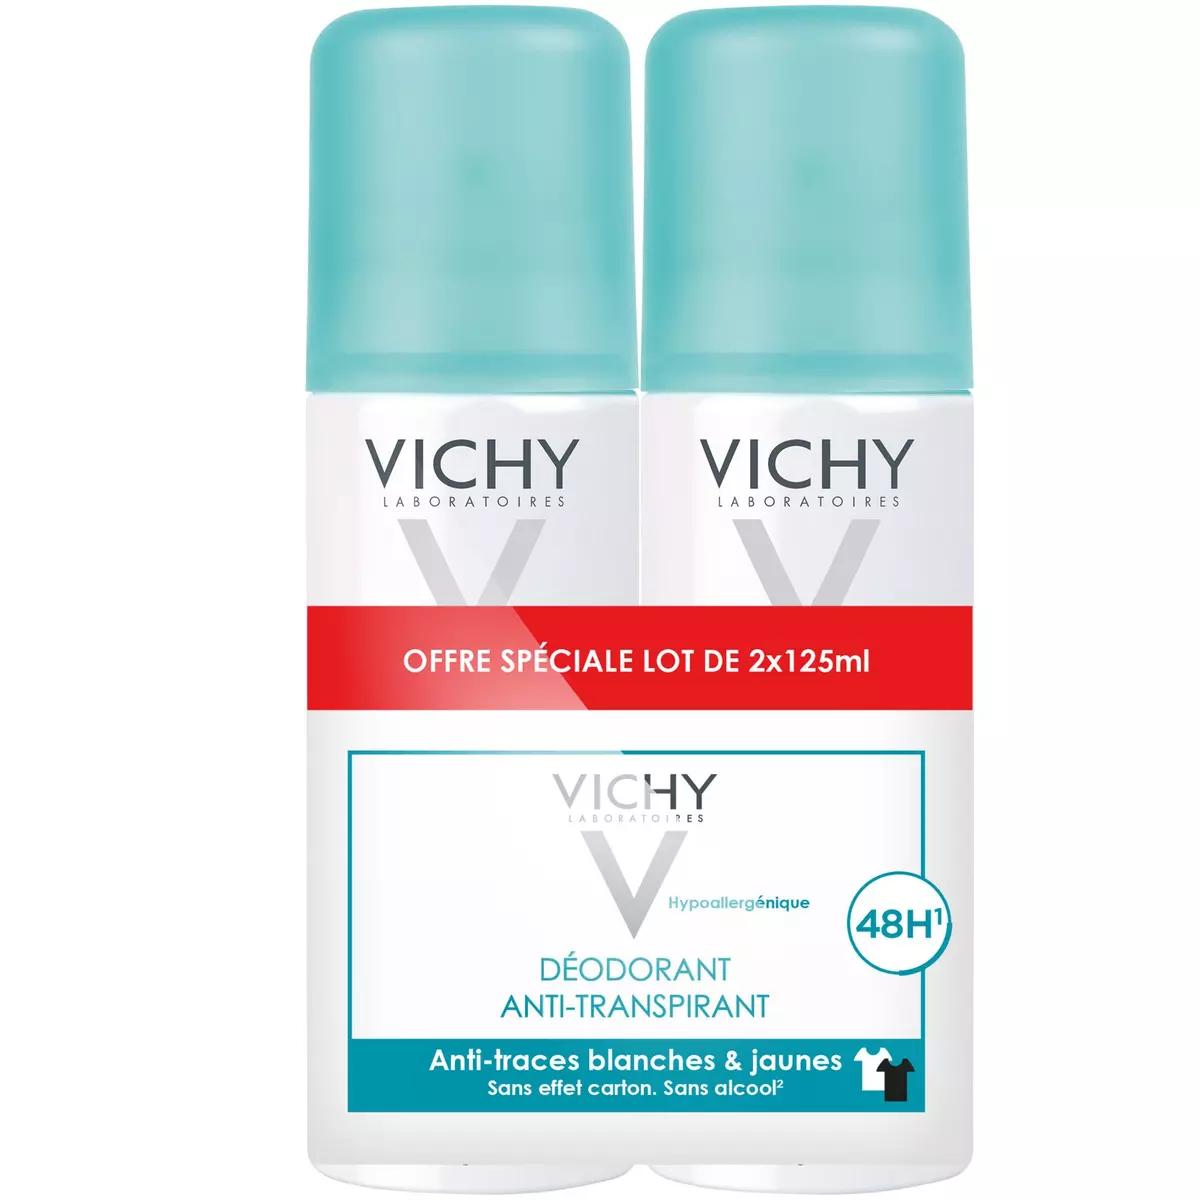 VICHY Déodorant spray anti-transpirant anti-traces 48h hypoallergénique 2x125ml